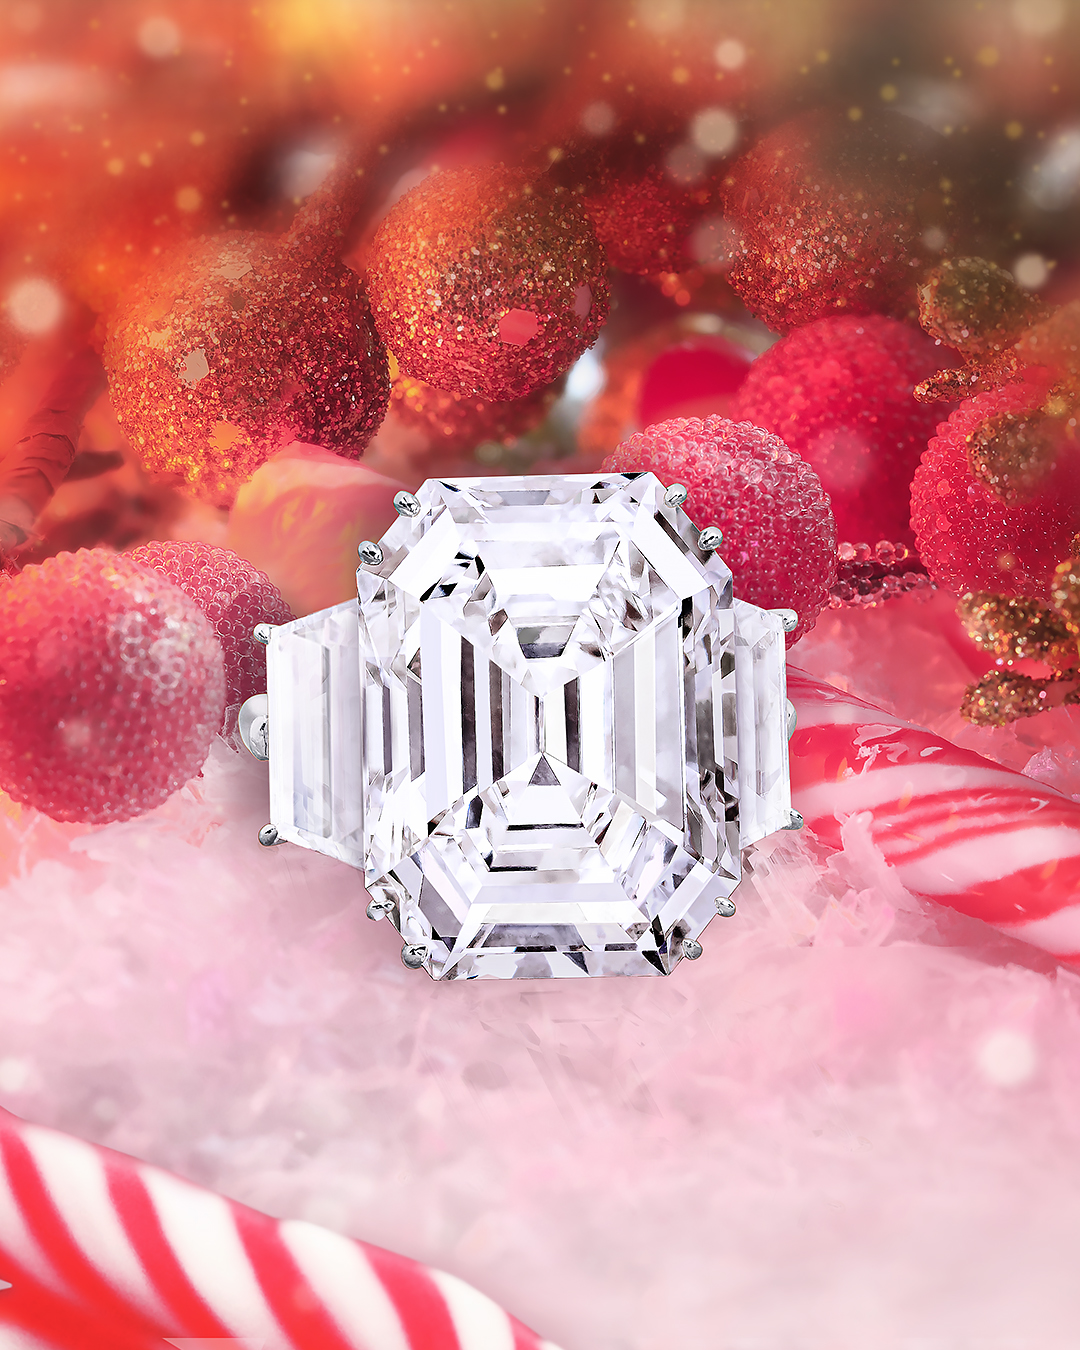 celia fabbri photography high jewellery chatila jewels big perfect white diamond ring